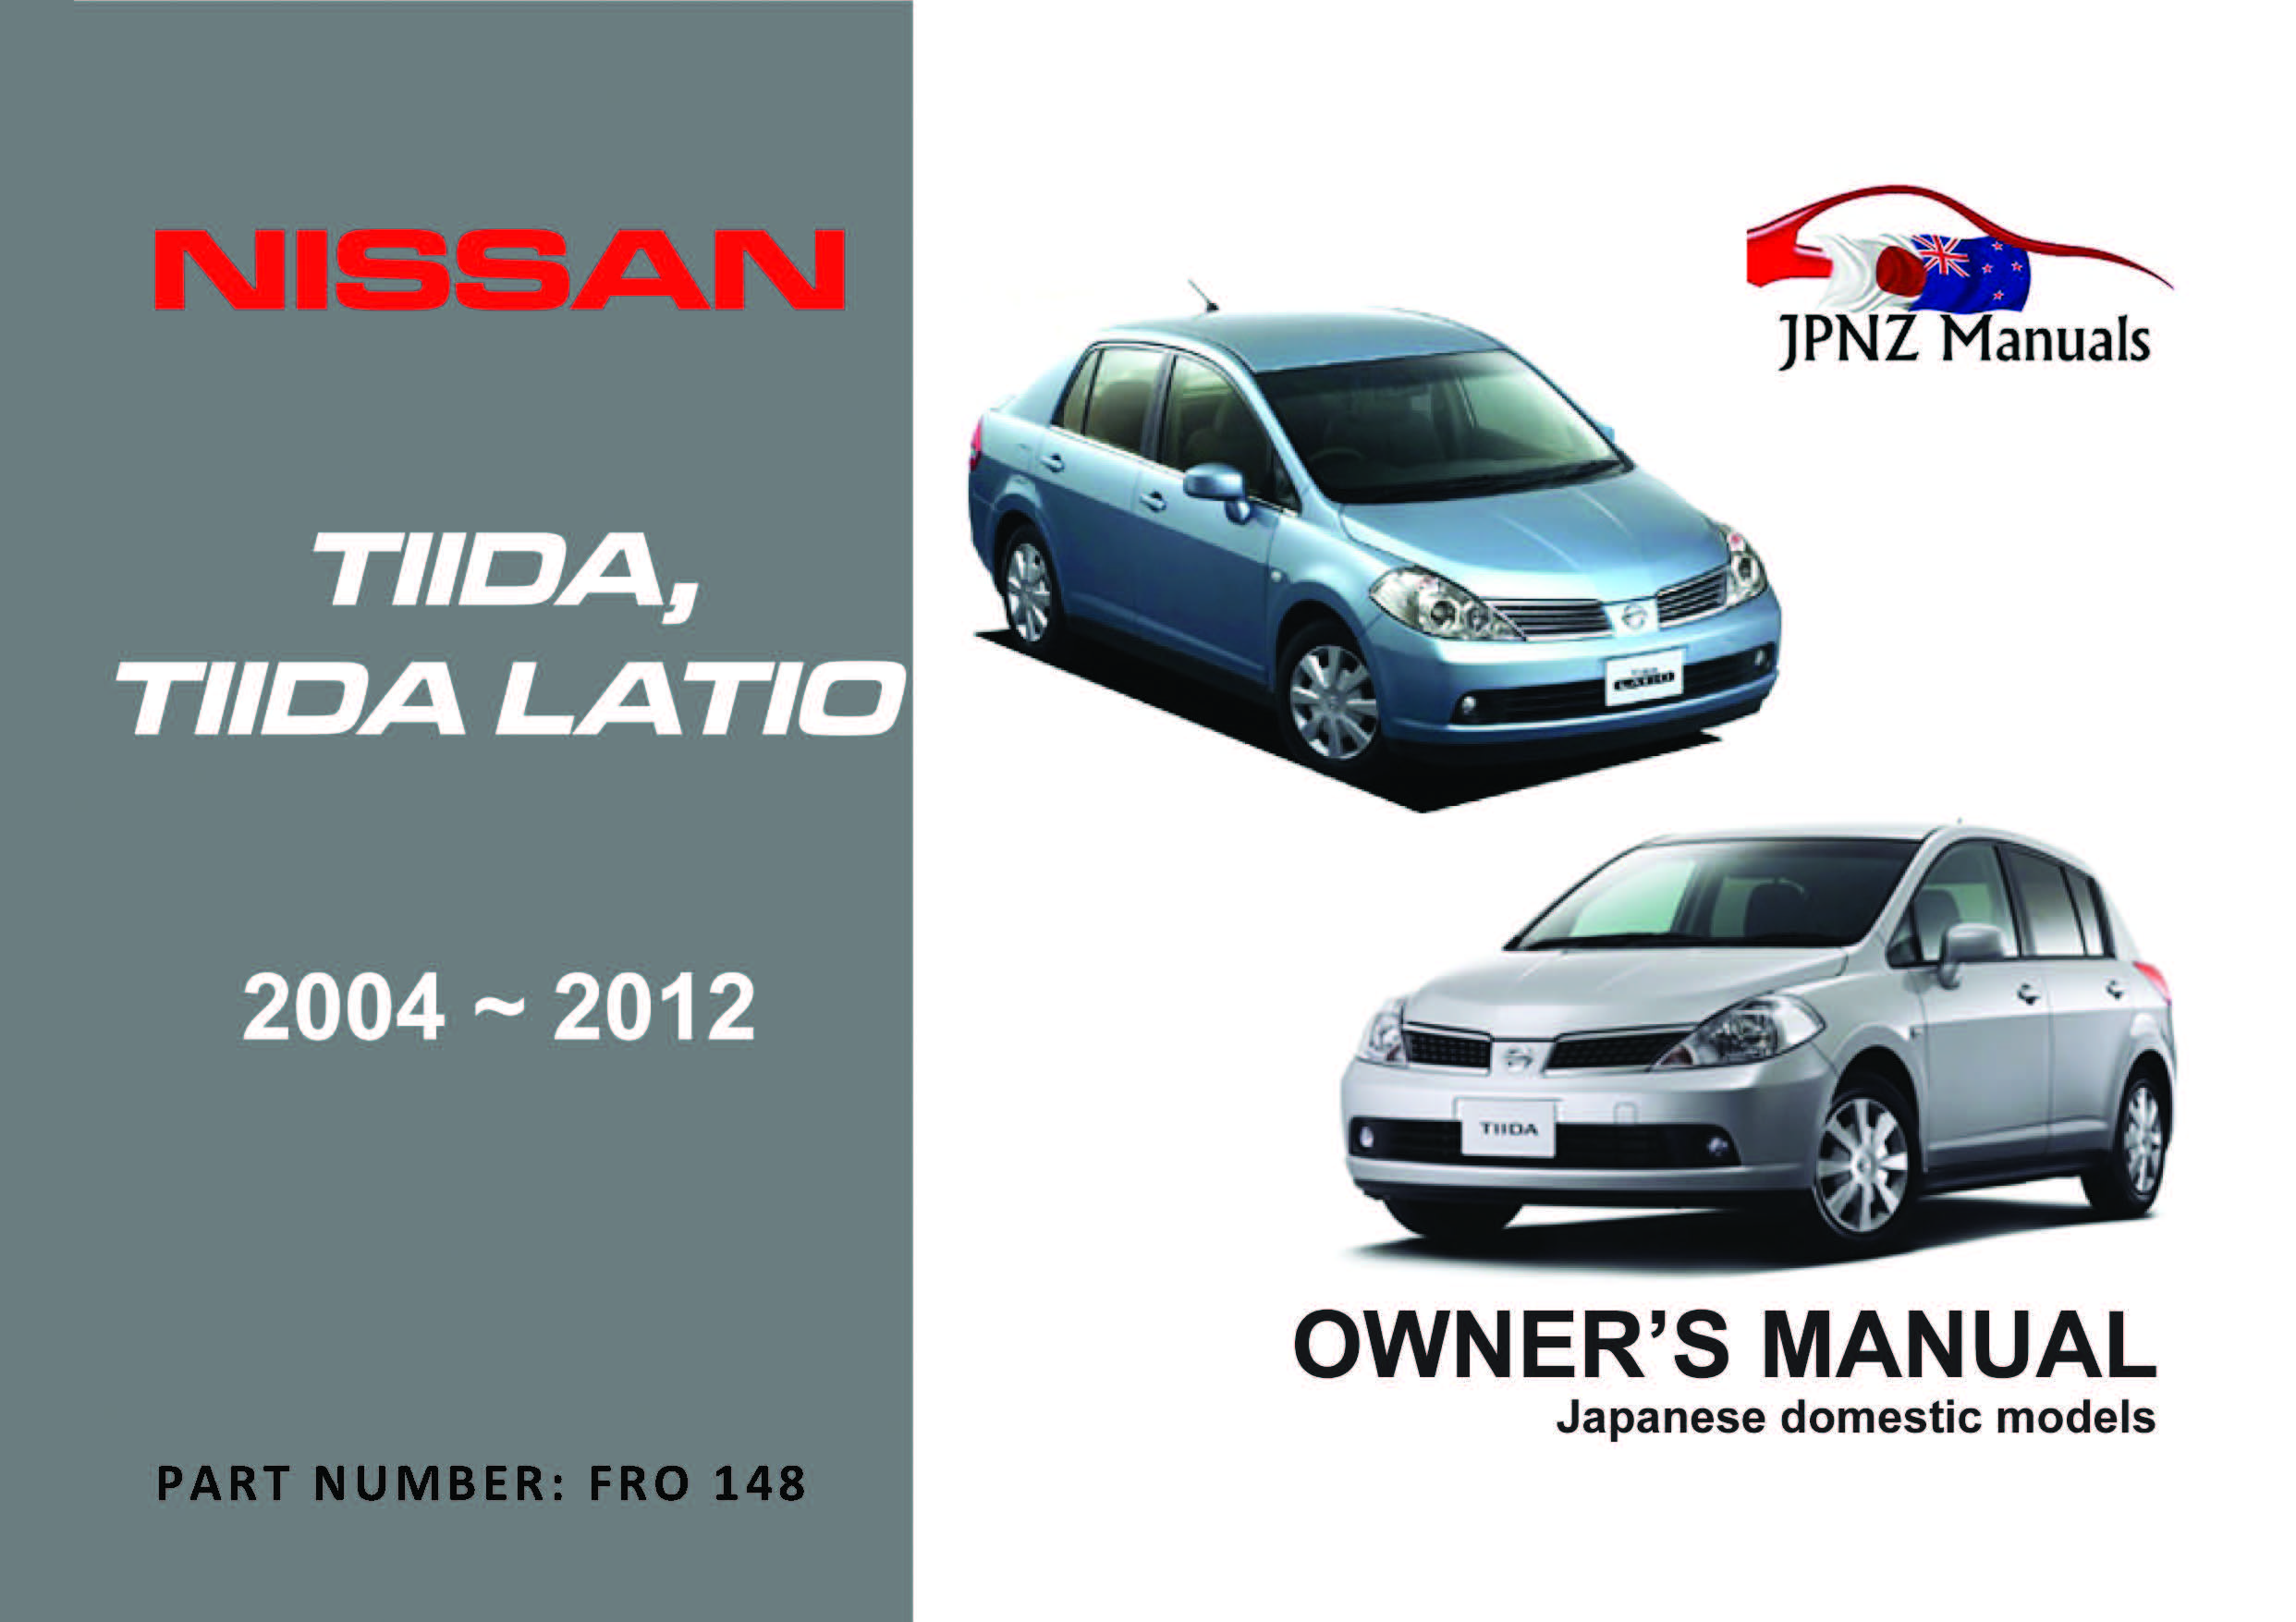 Nissan tiida 2009 user manual pdf file